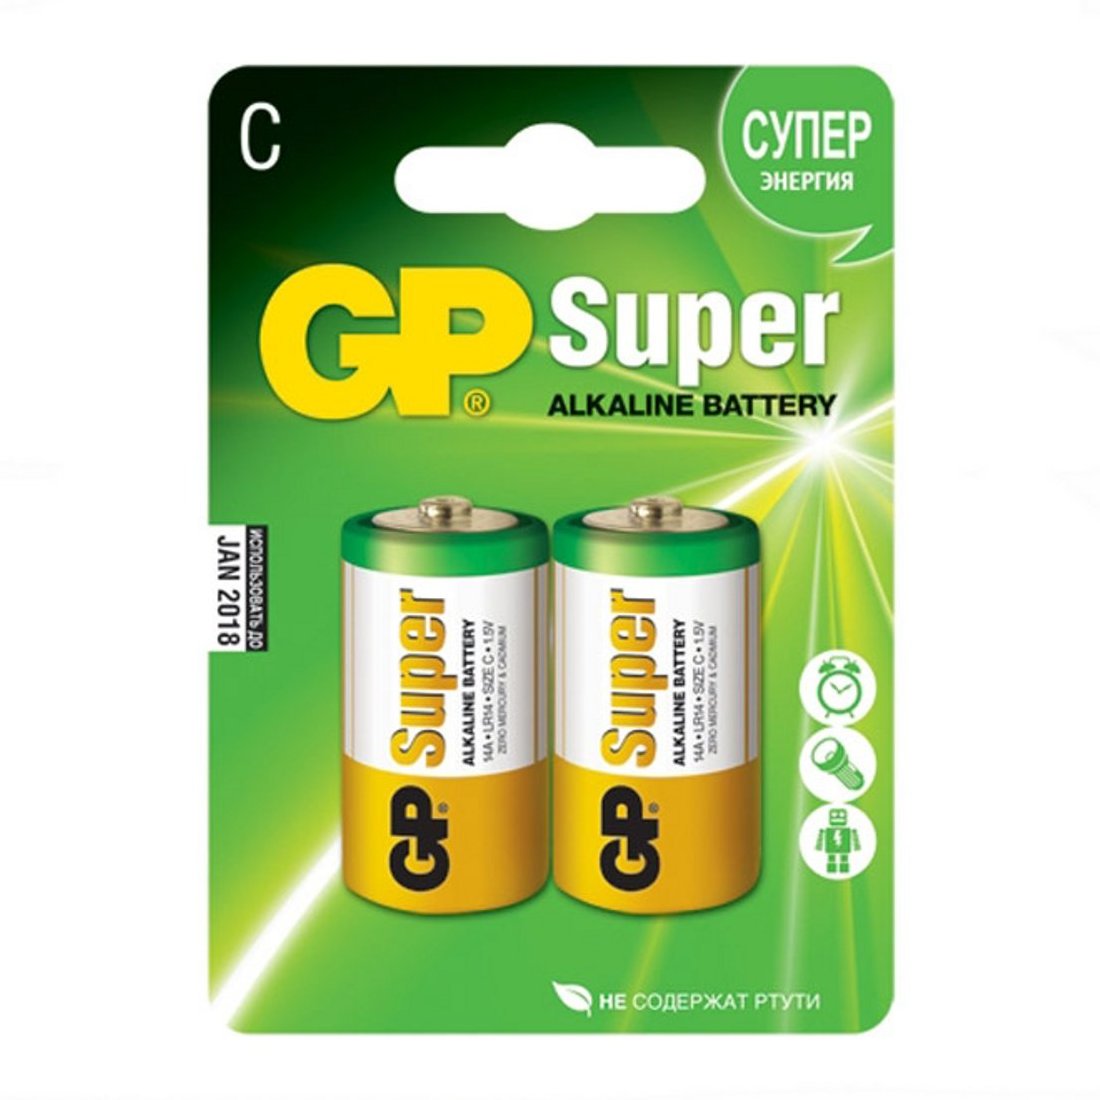 GP Super, batteri Alkaline, 2-pak